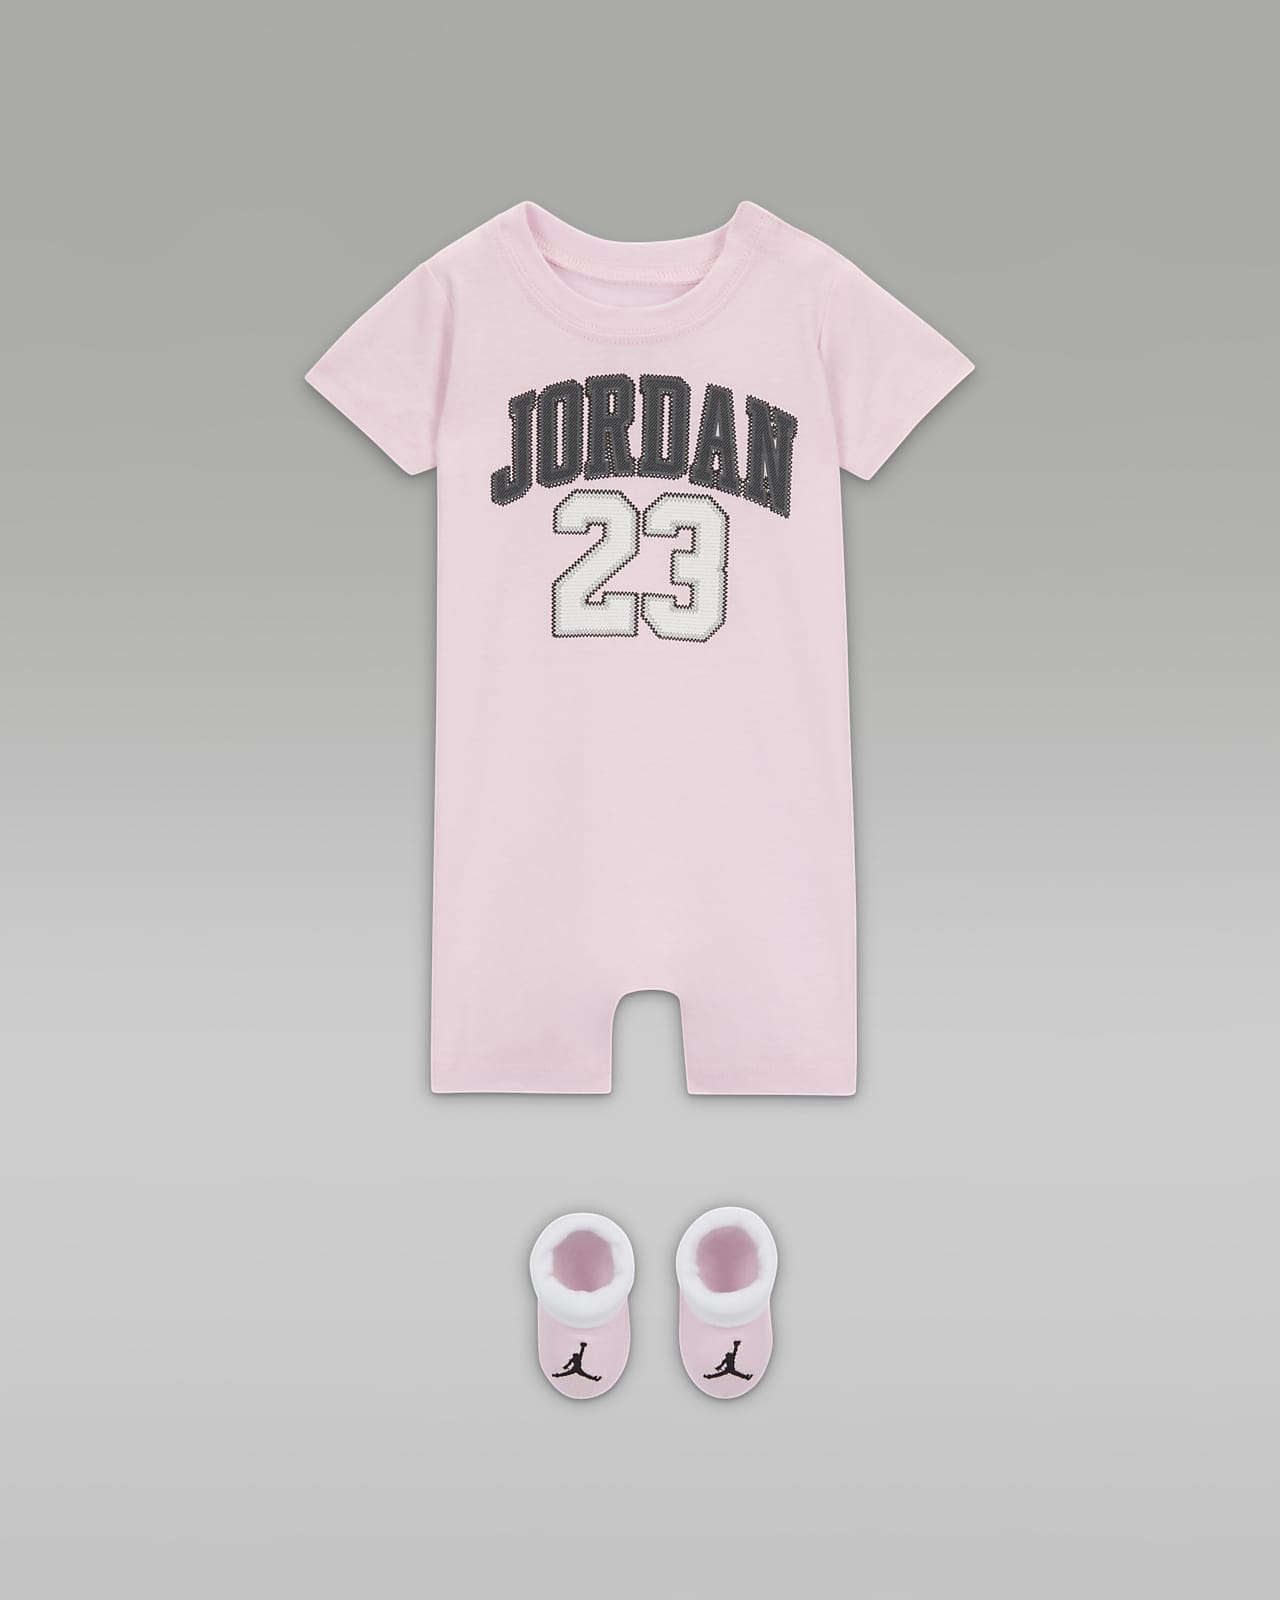 Jordan Baby Romper and Booties Set